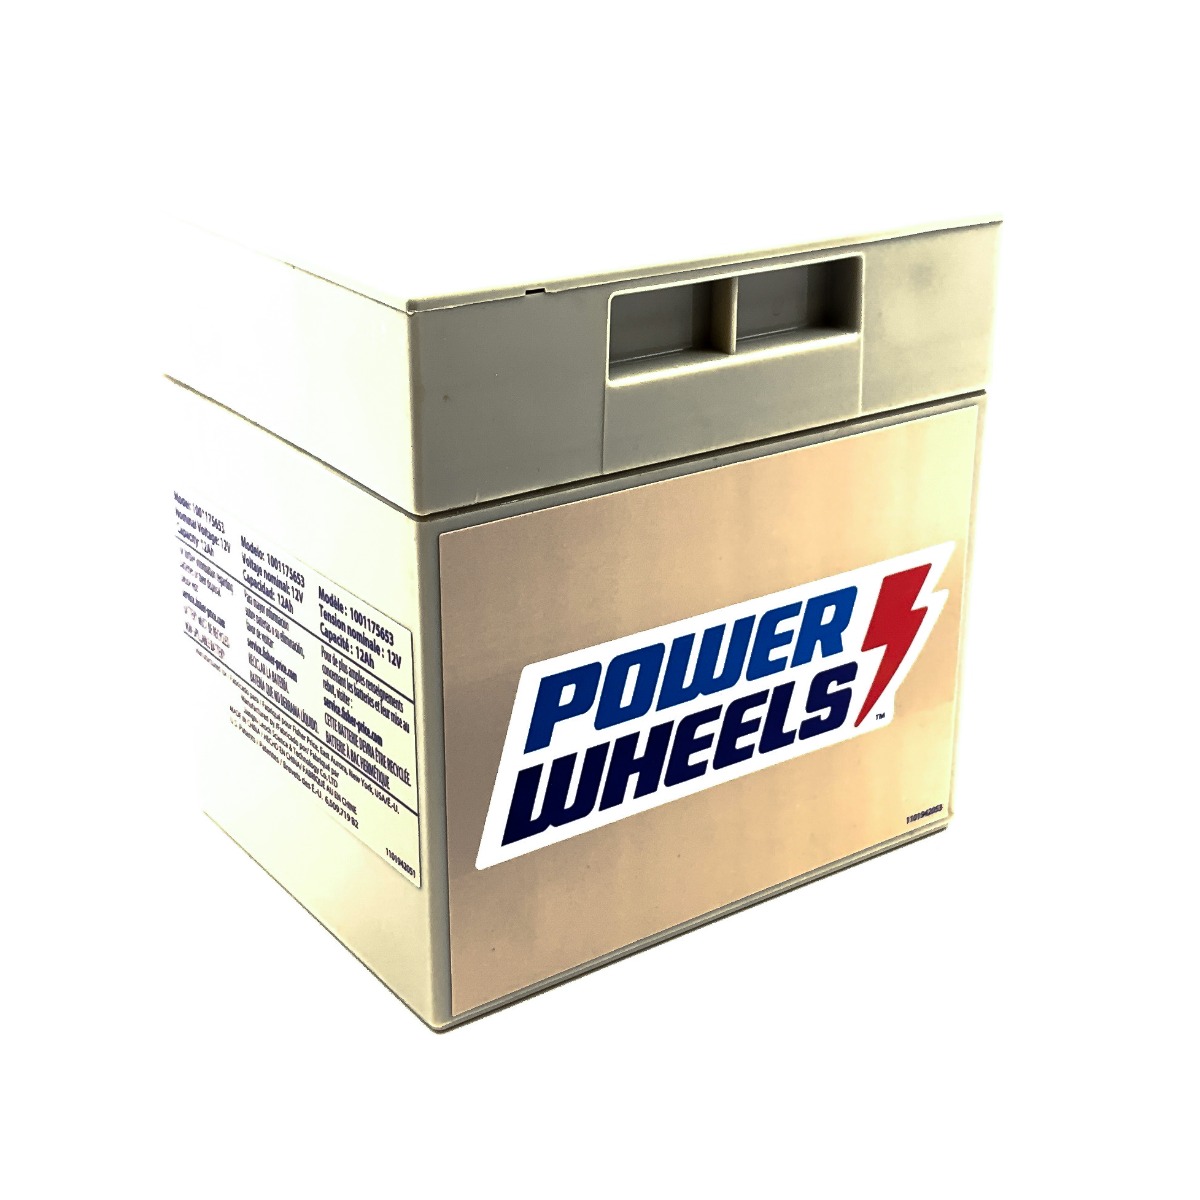 Power Wheels 12-Volt Rechargeable Replacement Battery, Multicolor 74777